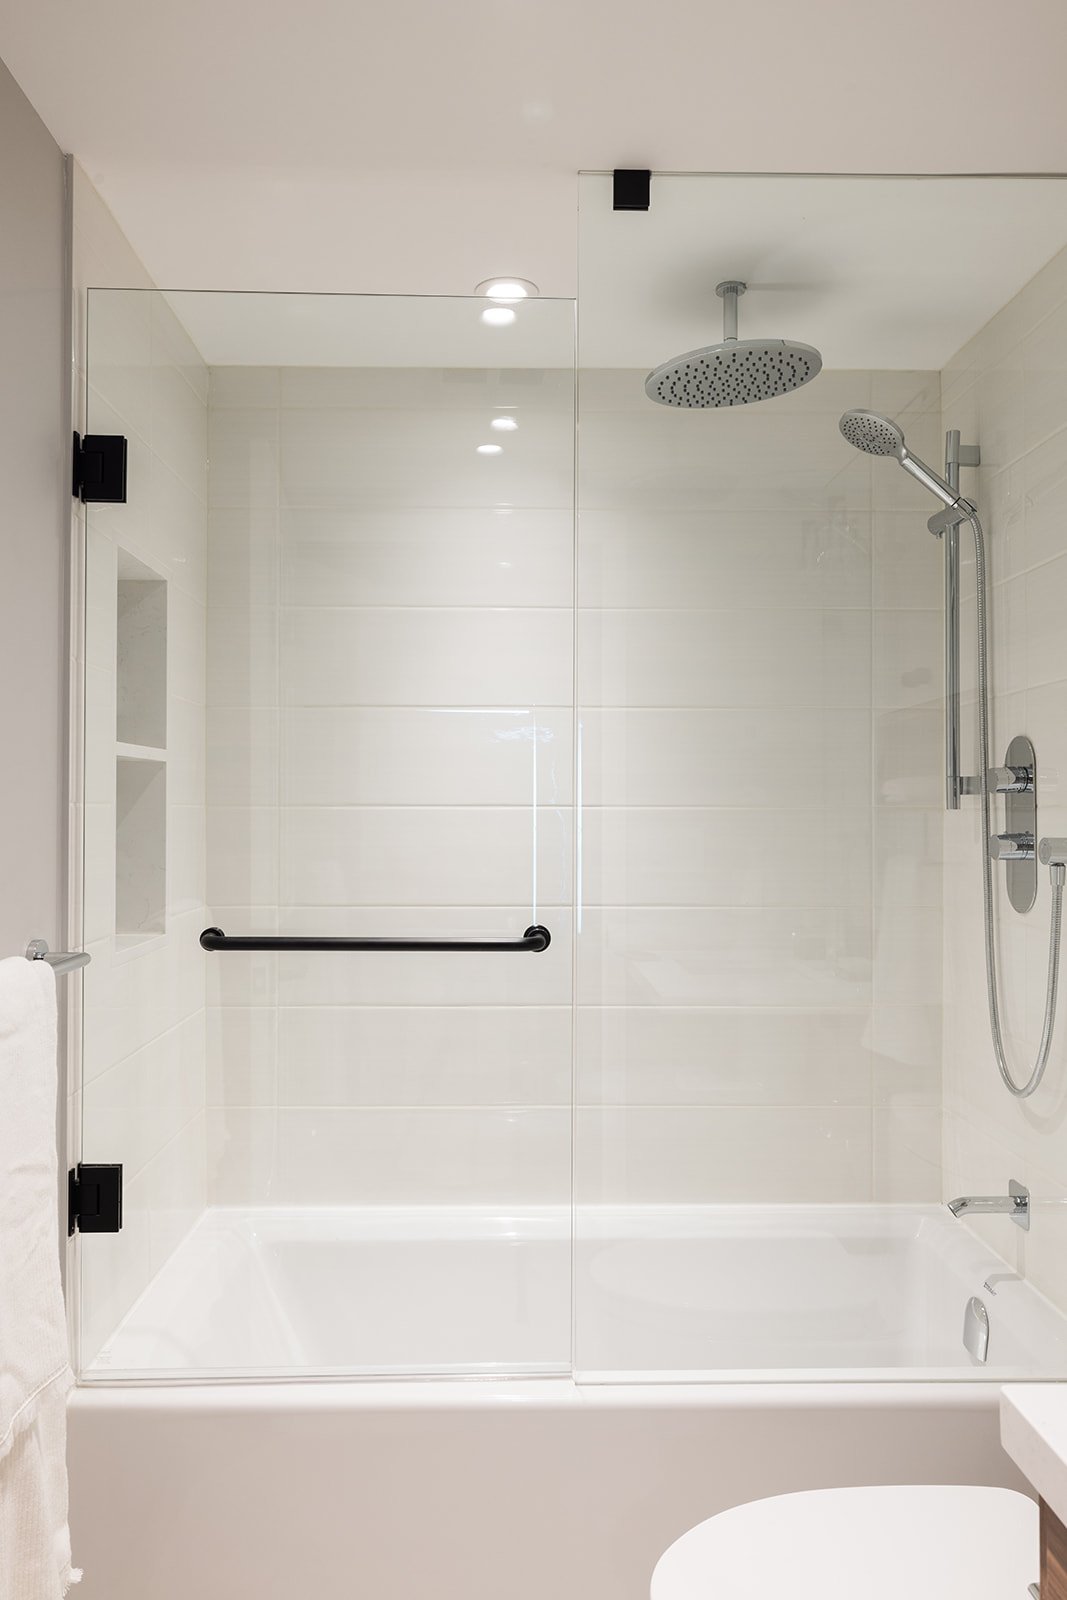 Tub shower combo in GTA condo bathroom renovation with sliding glass door